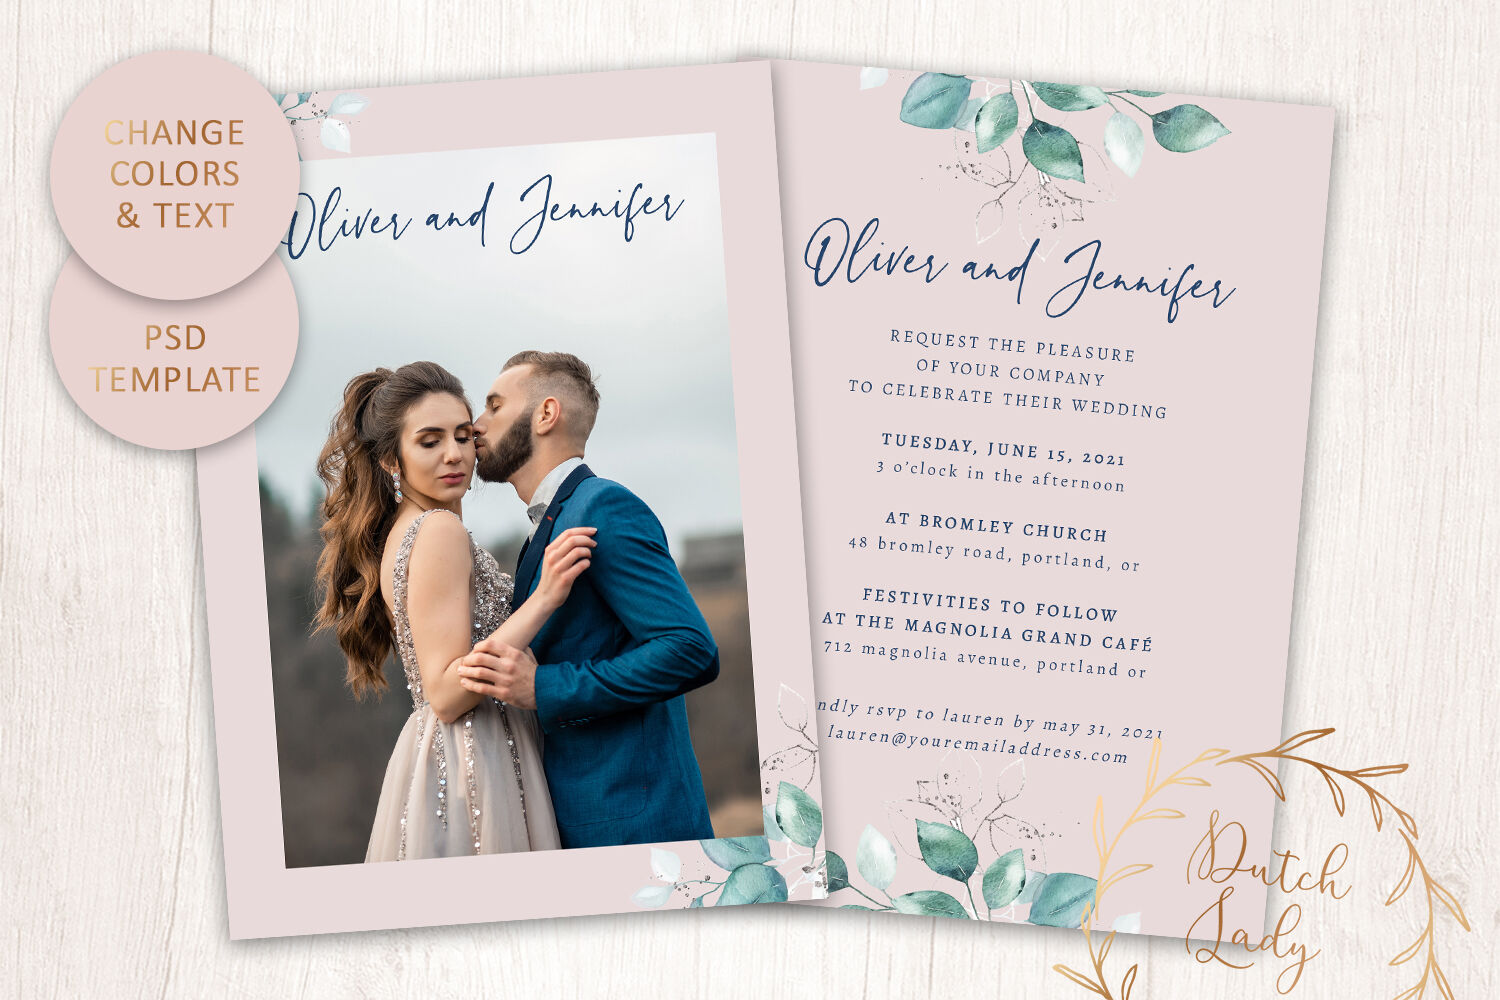 psd wedding invitation template #1 by the dutch lady designs | thehungryjpeg